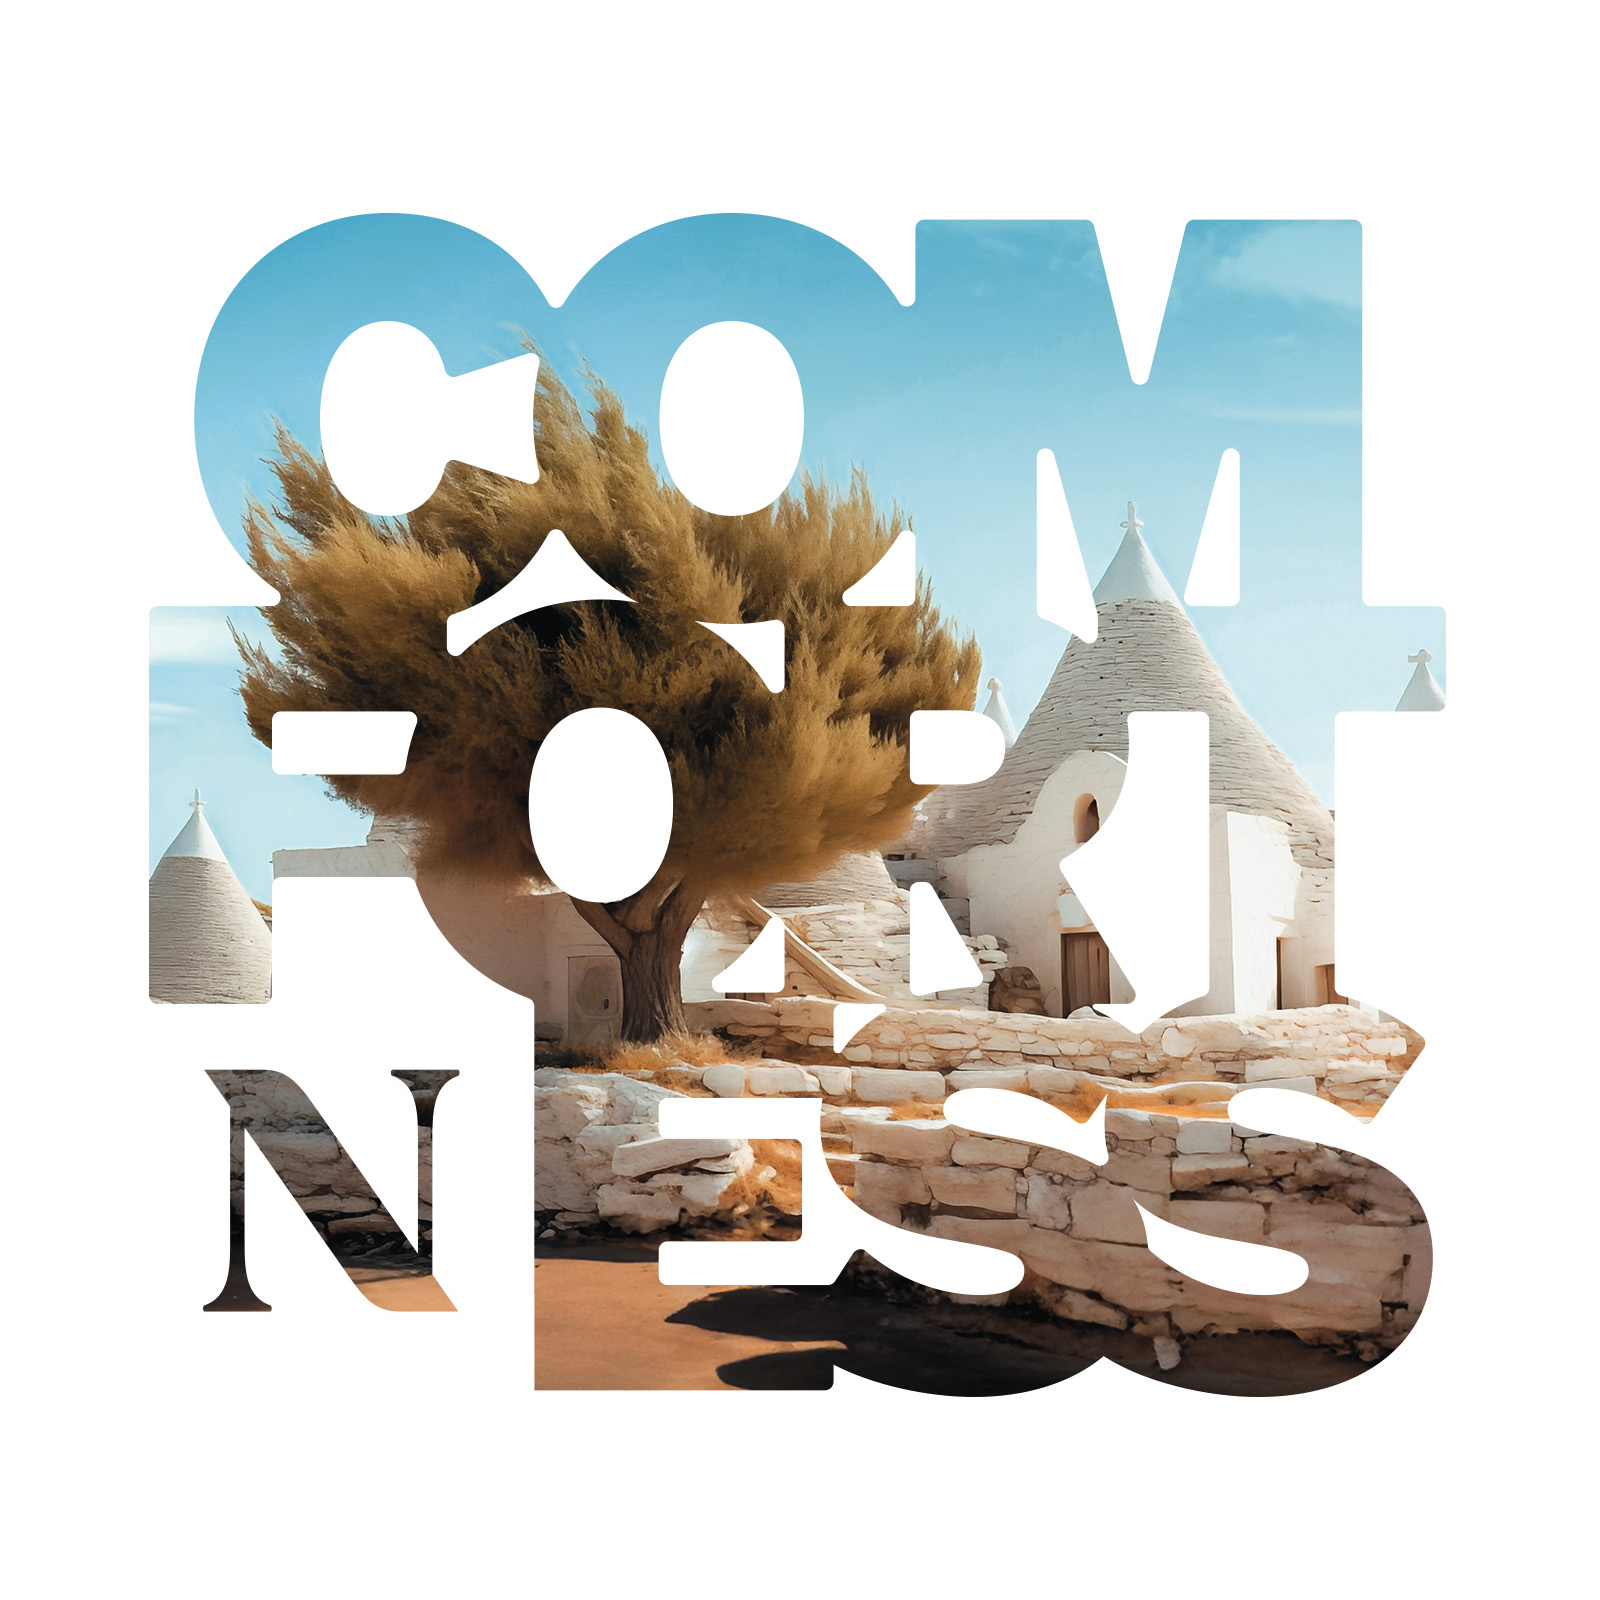 Natuzzi editorial - Comfortness & Wellness 系列